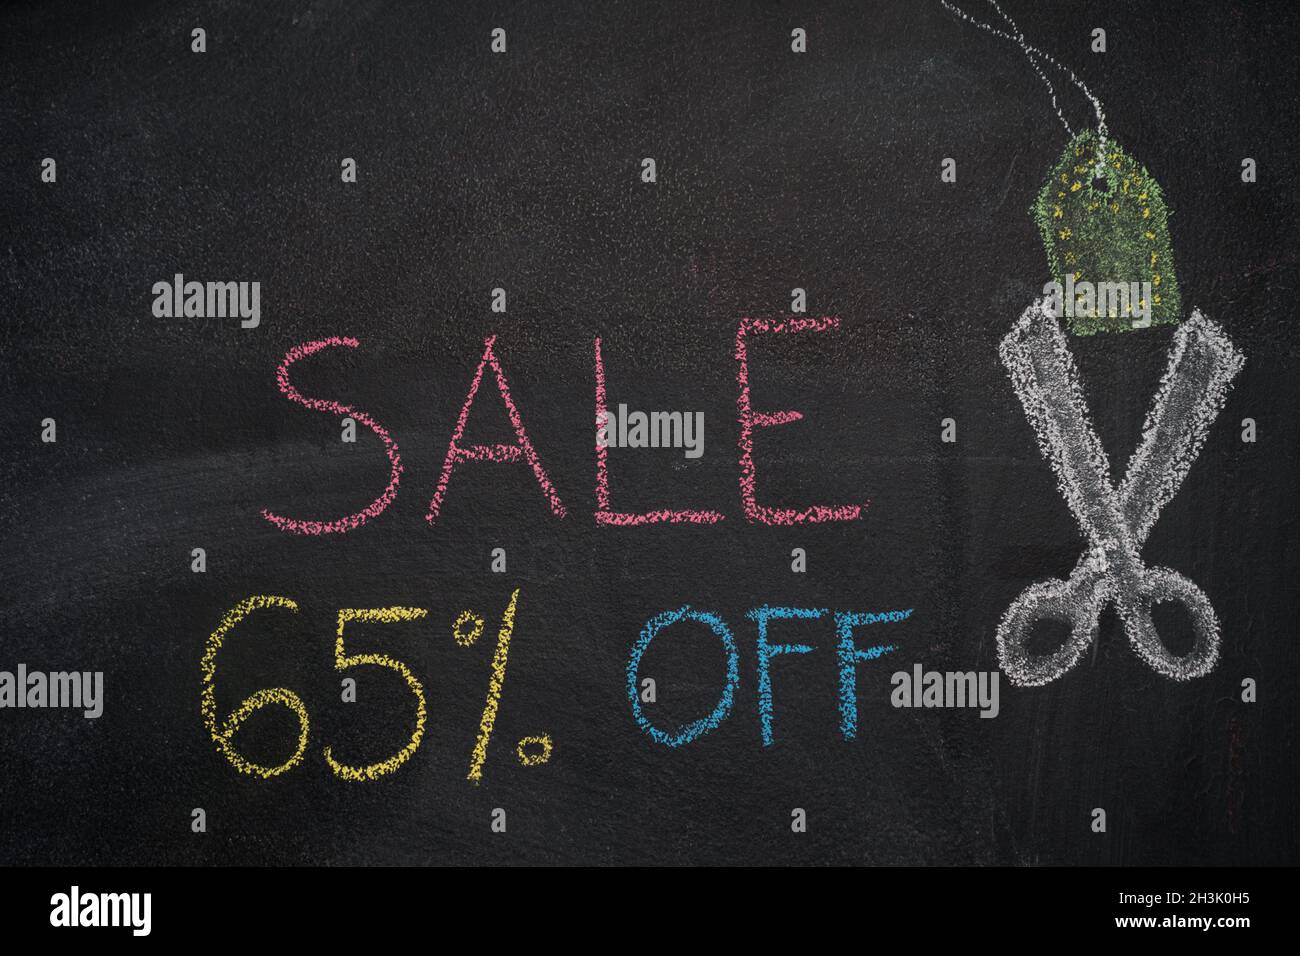 Sale 65% off on chalkboard Stock Photo